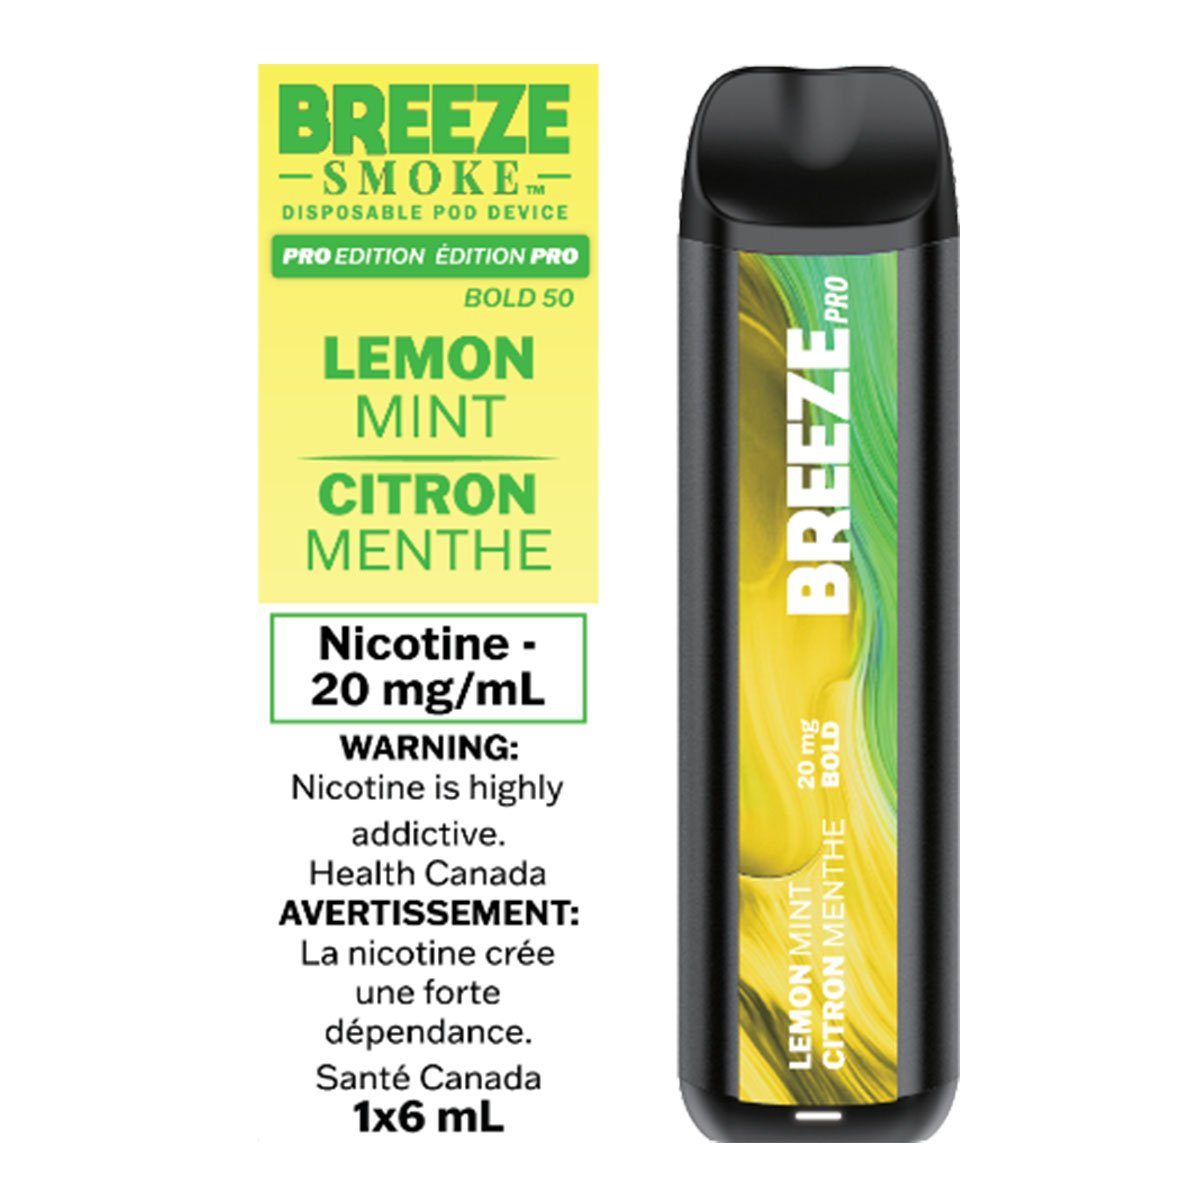 Breeze Pro - Lemon Mint Disposable Breeze Smoke 20mg/mL (Bold 50) 